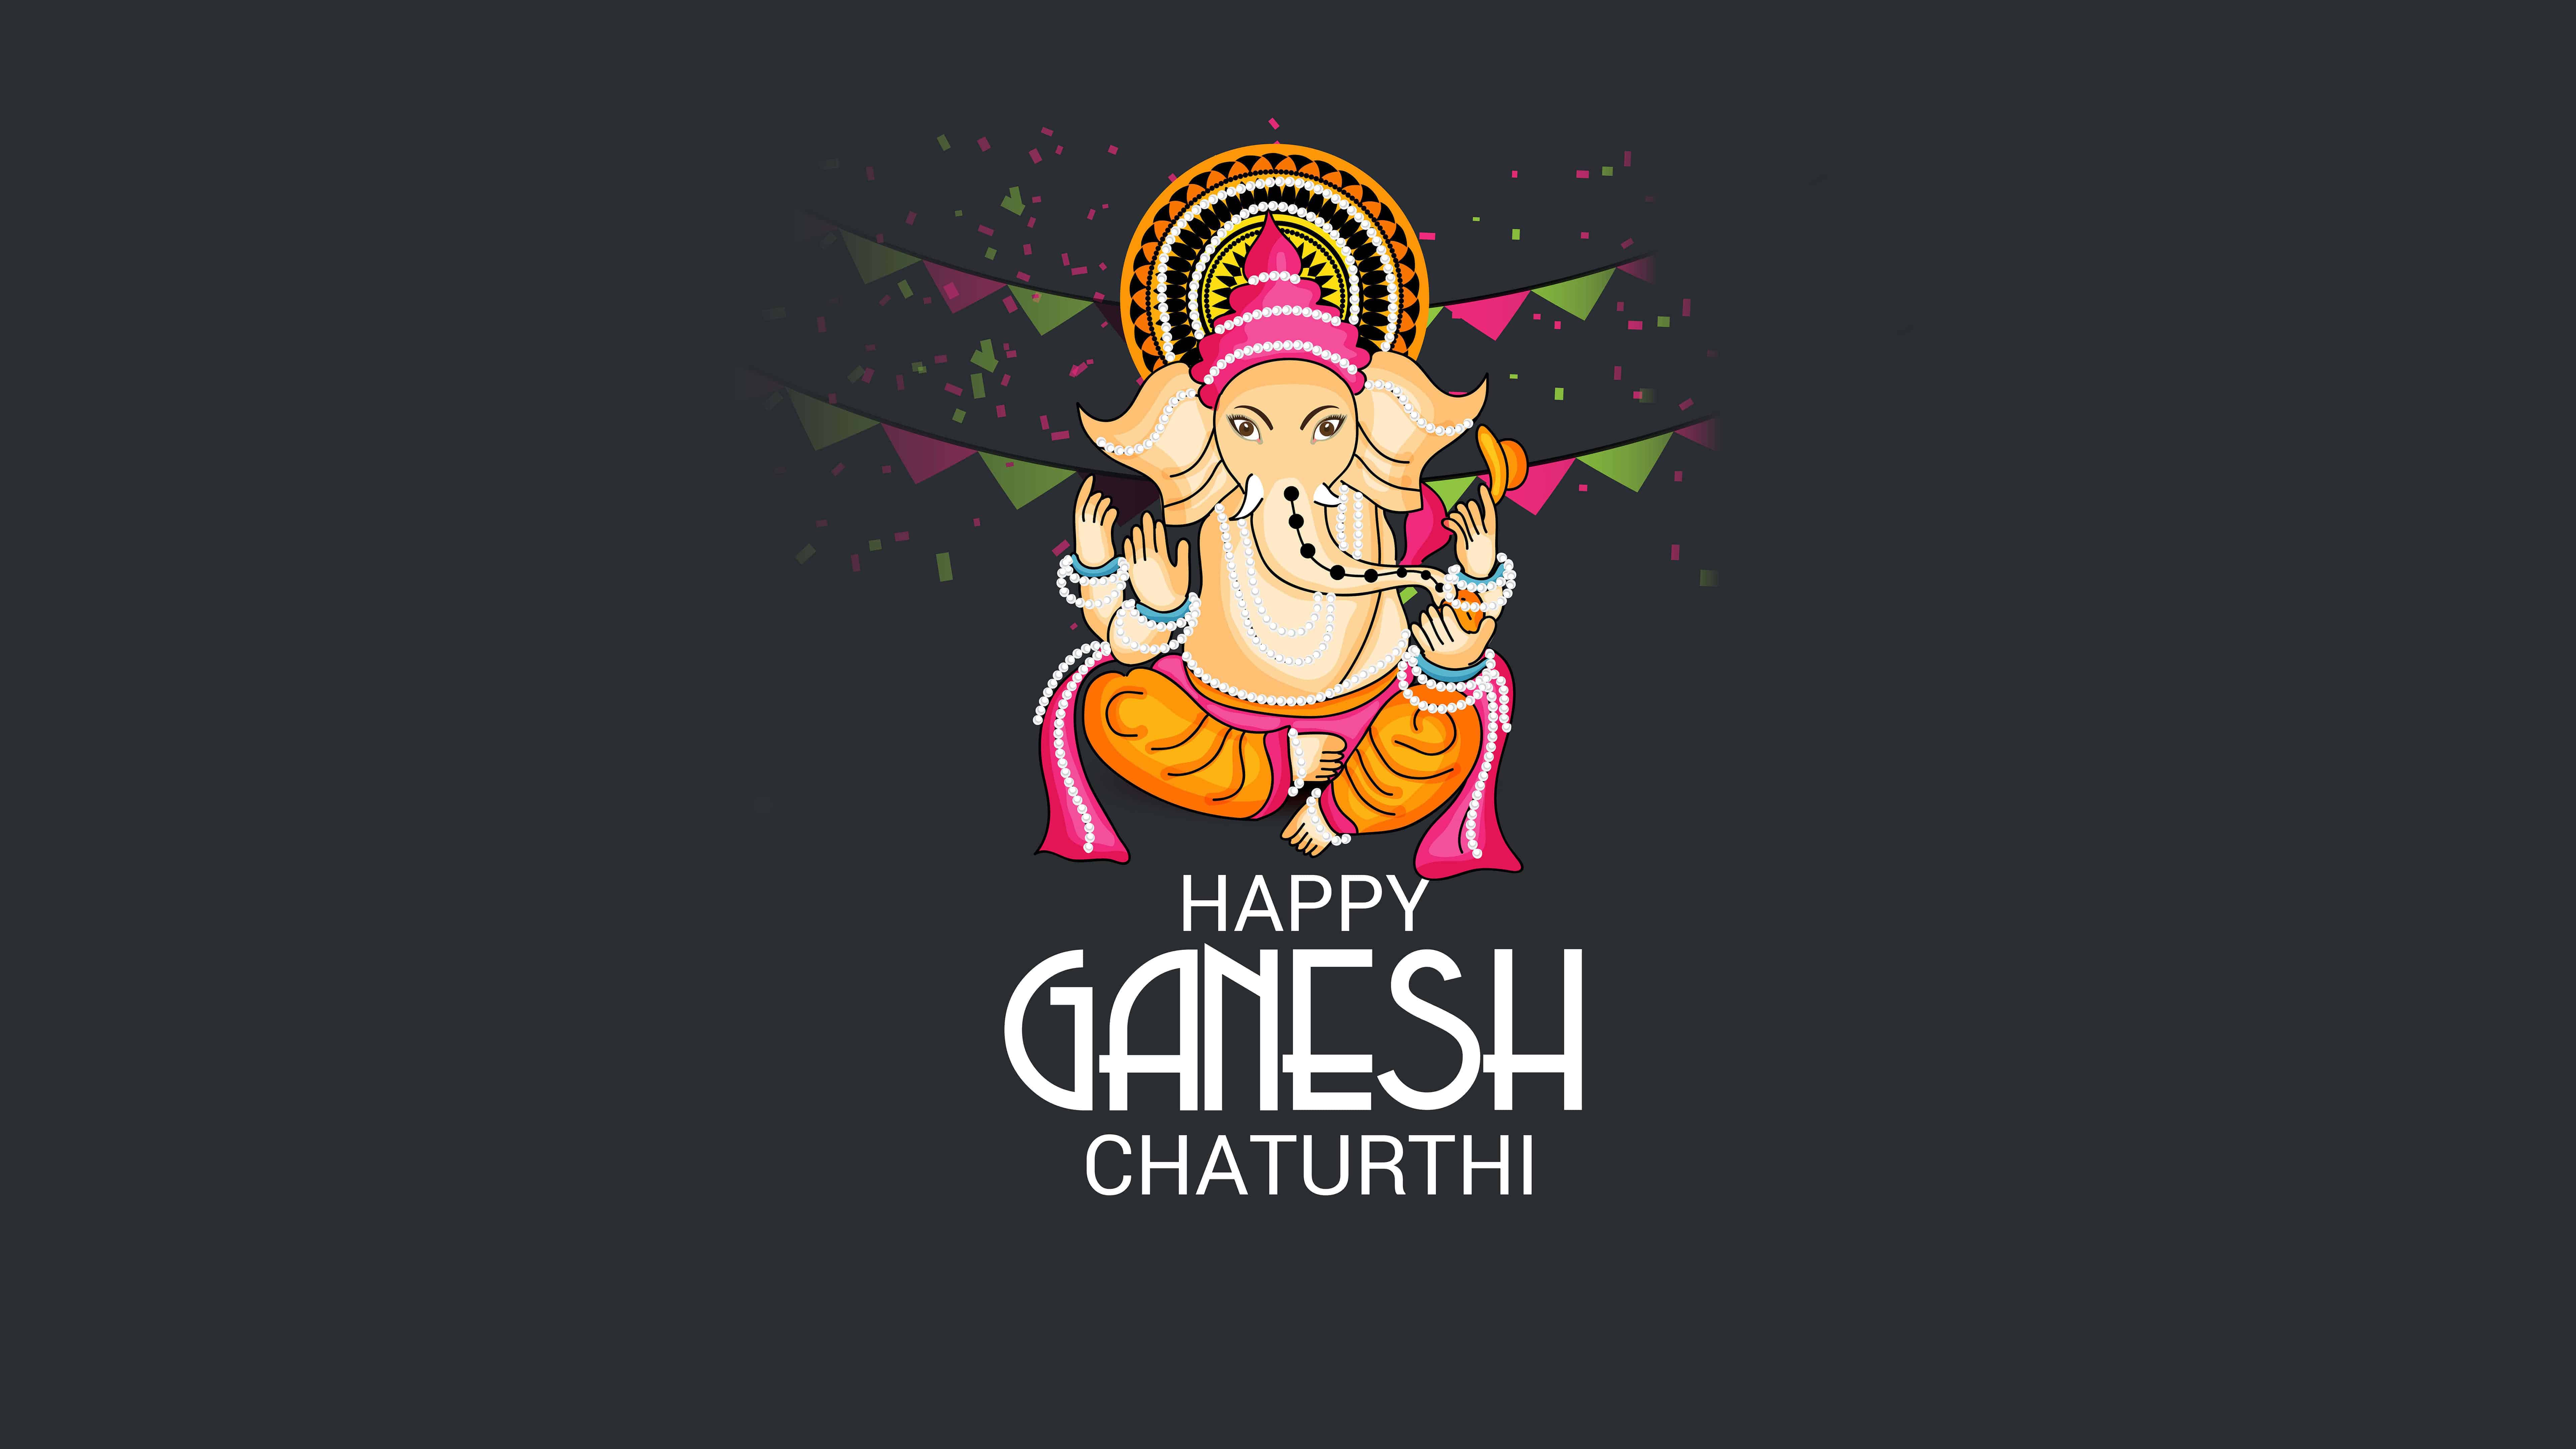 Happy Ganesh Chaturthi UHD 8K Wallpaper